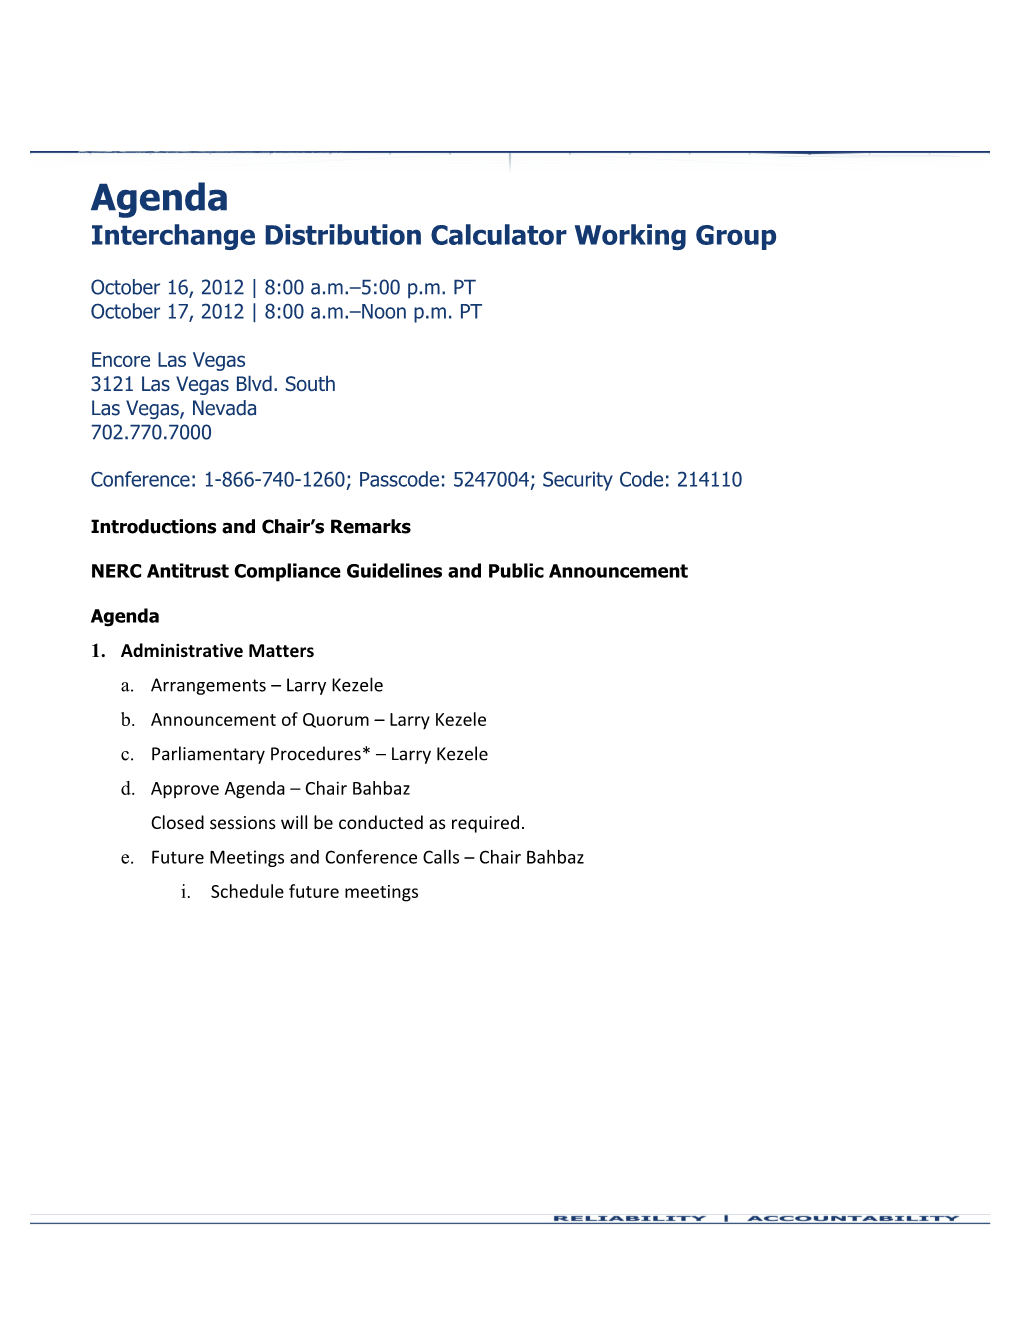 Interchange Distribution Calculator Workinggroup